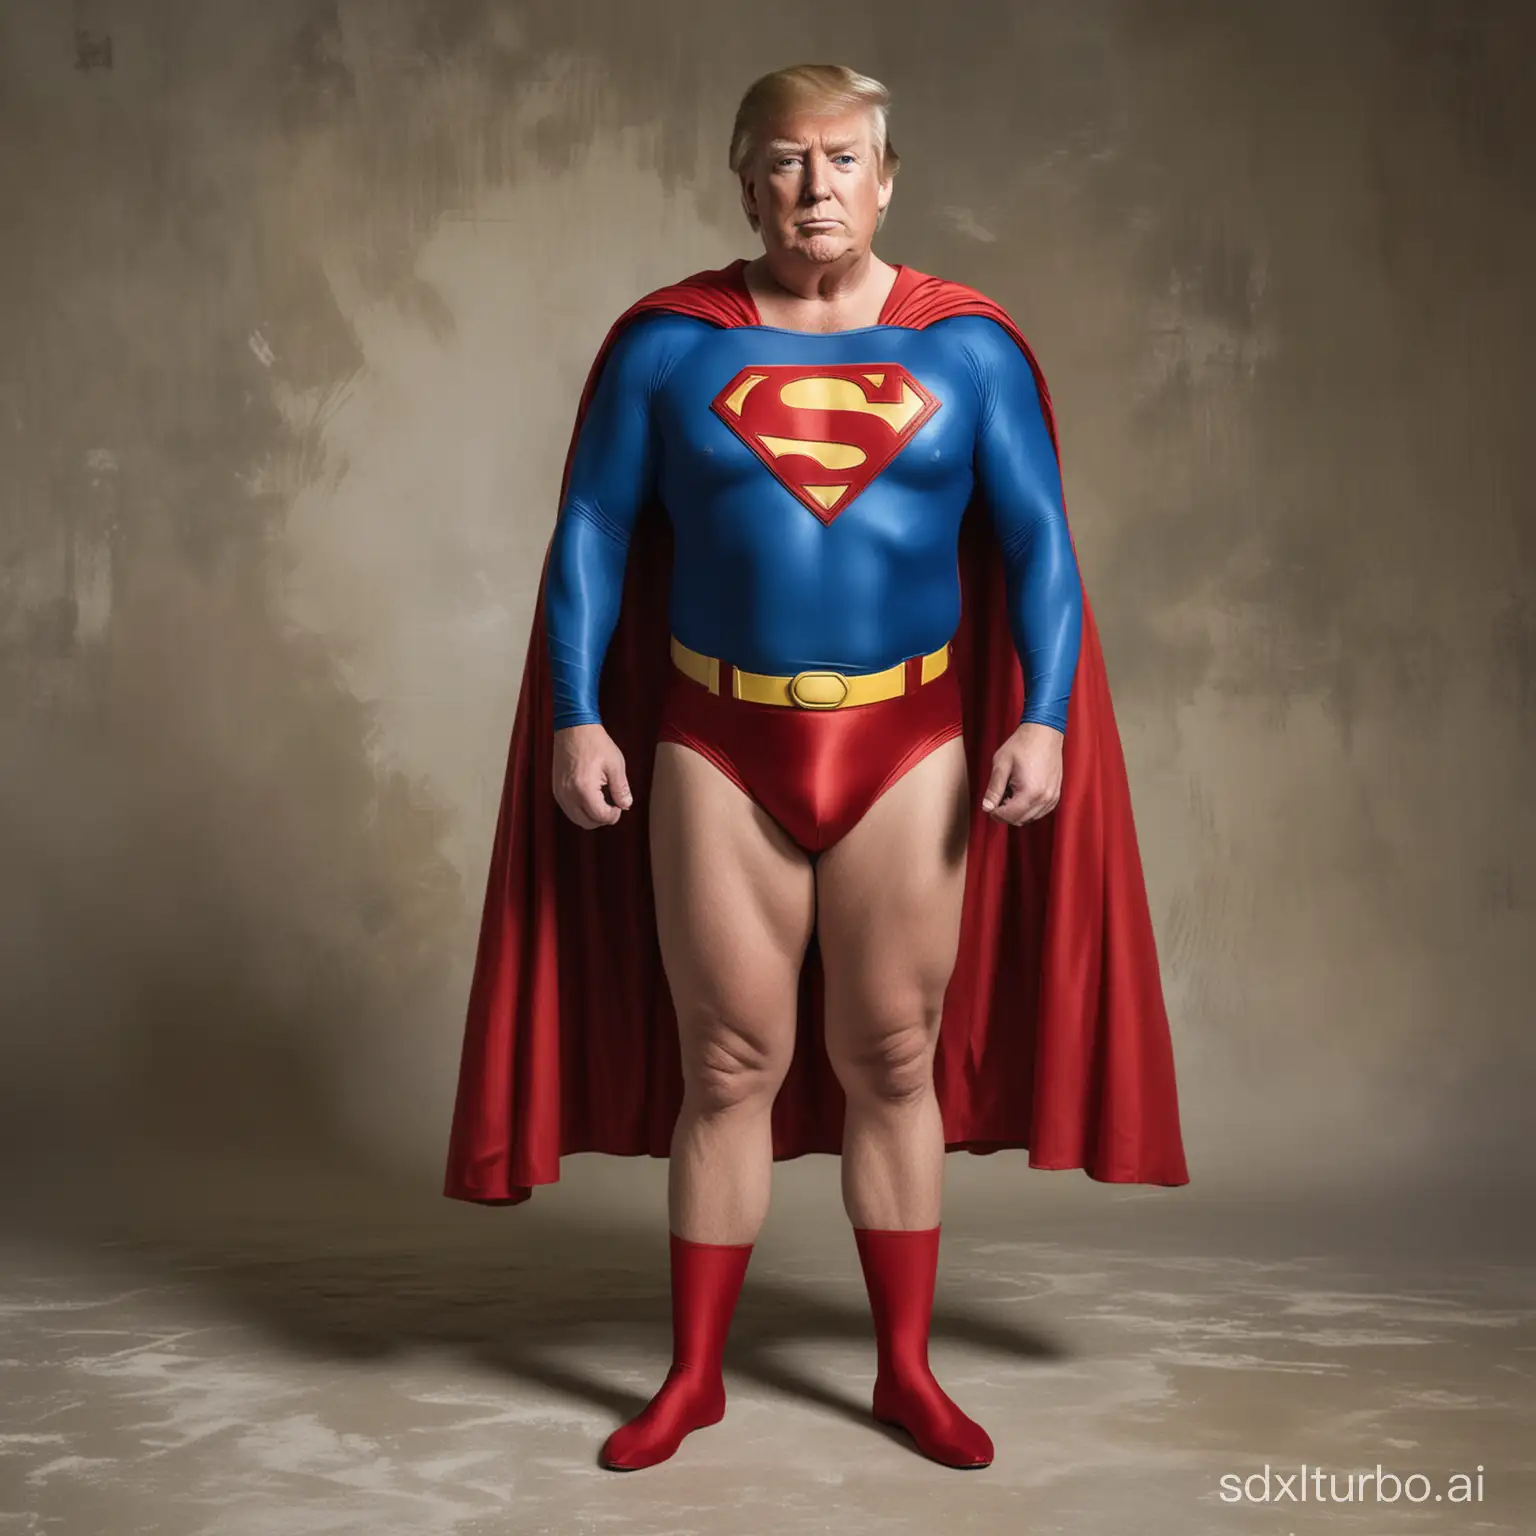 Full-body portrait of Trump, wearing Superman costume, shorts, cape